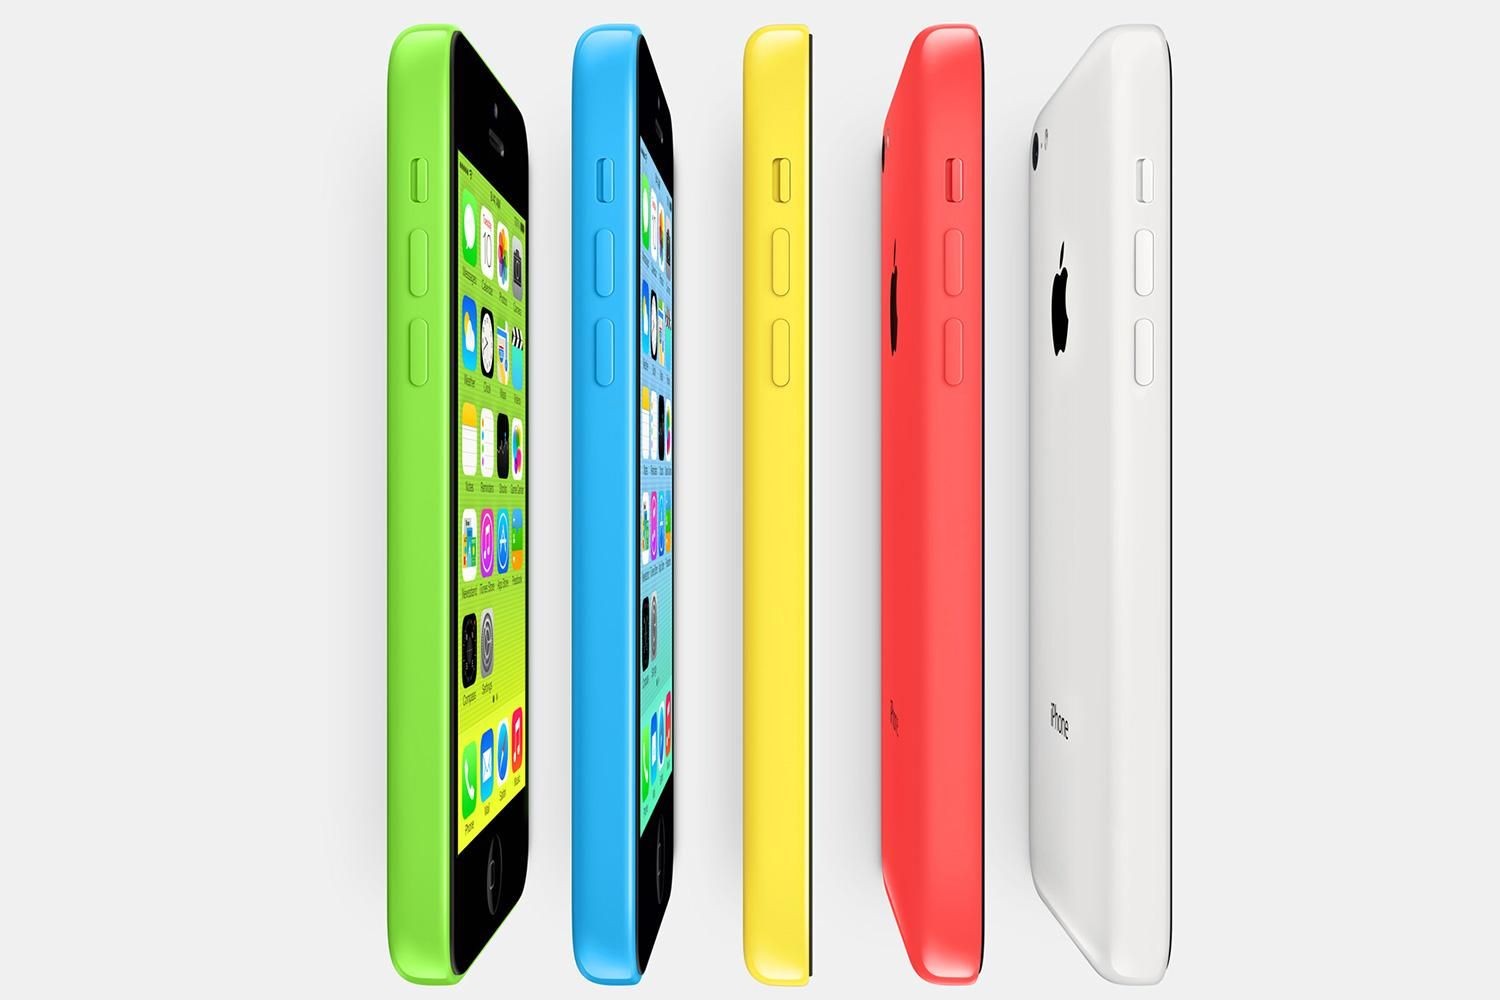 iPhone-5C-colors